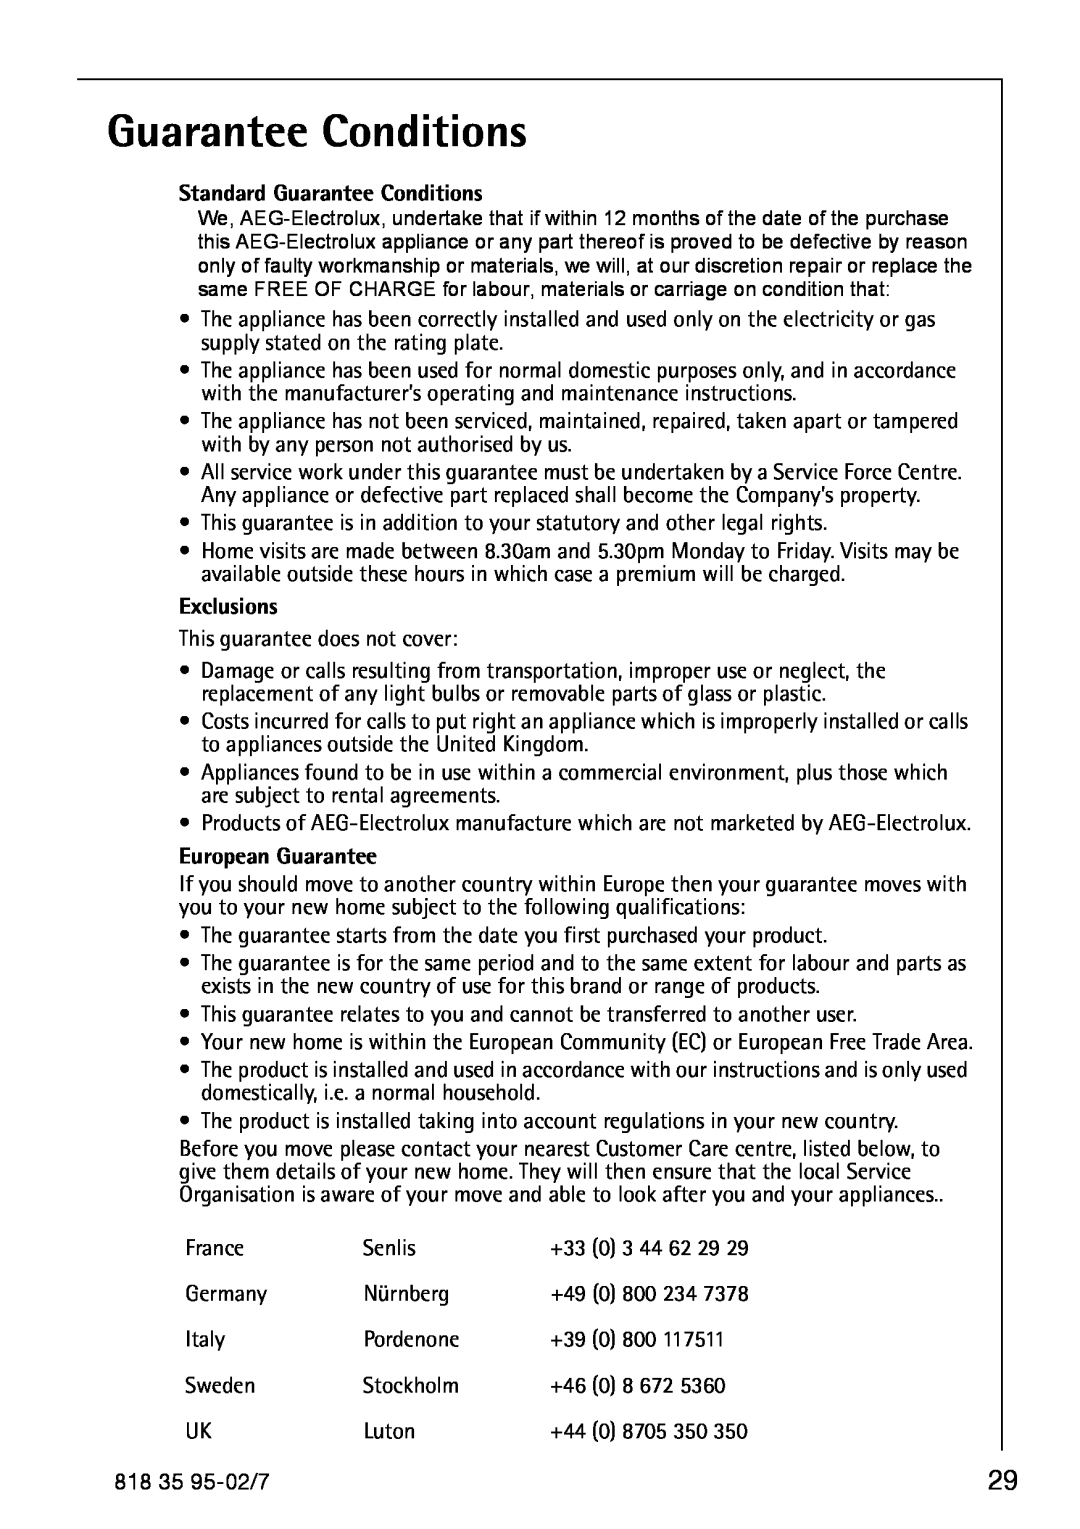 AEG 75248 GA3 manual Standard Guarantee Conditions, Exclusions, European Guarantee 